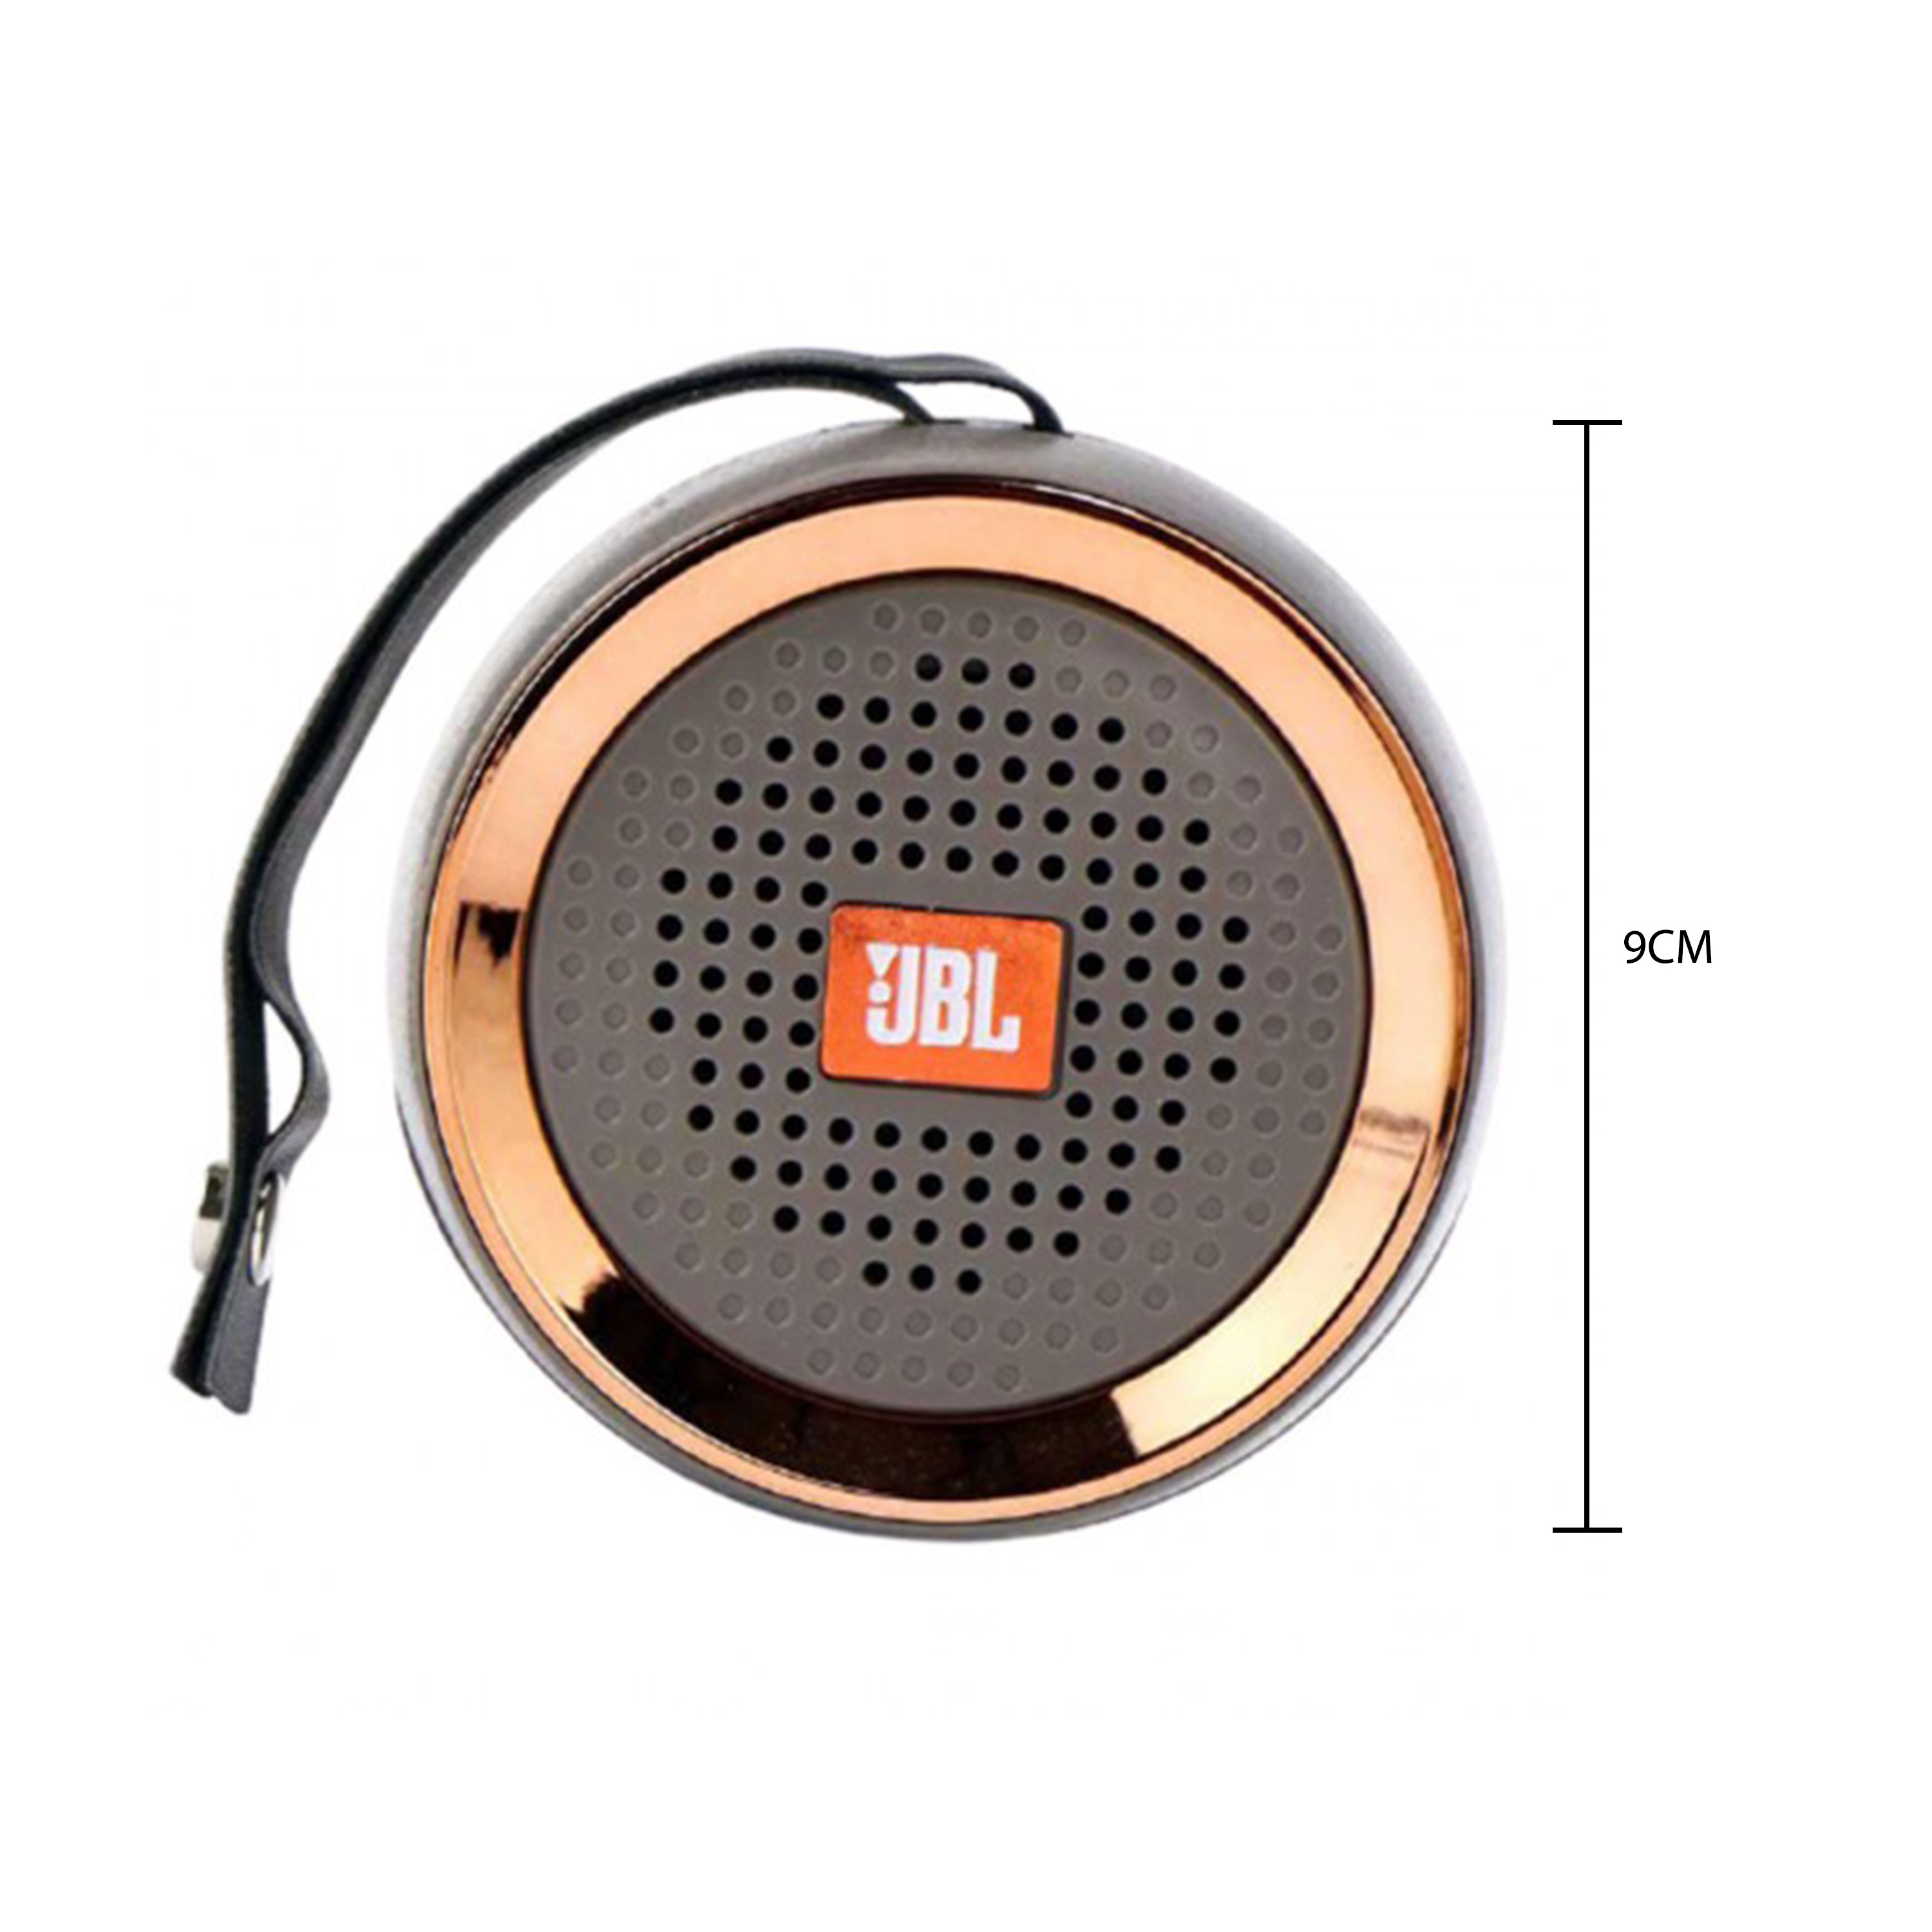 H813 Bluetooth Speaker